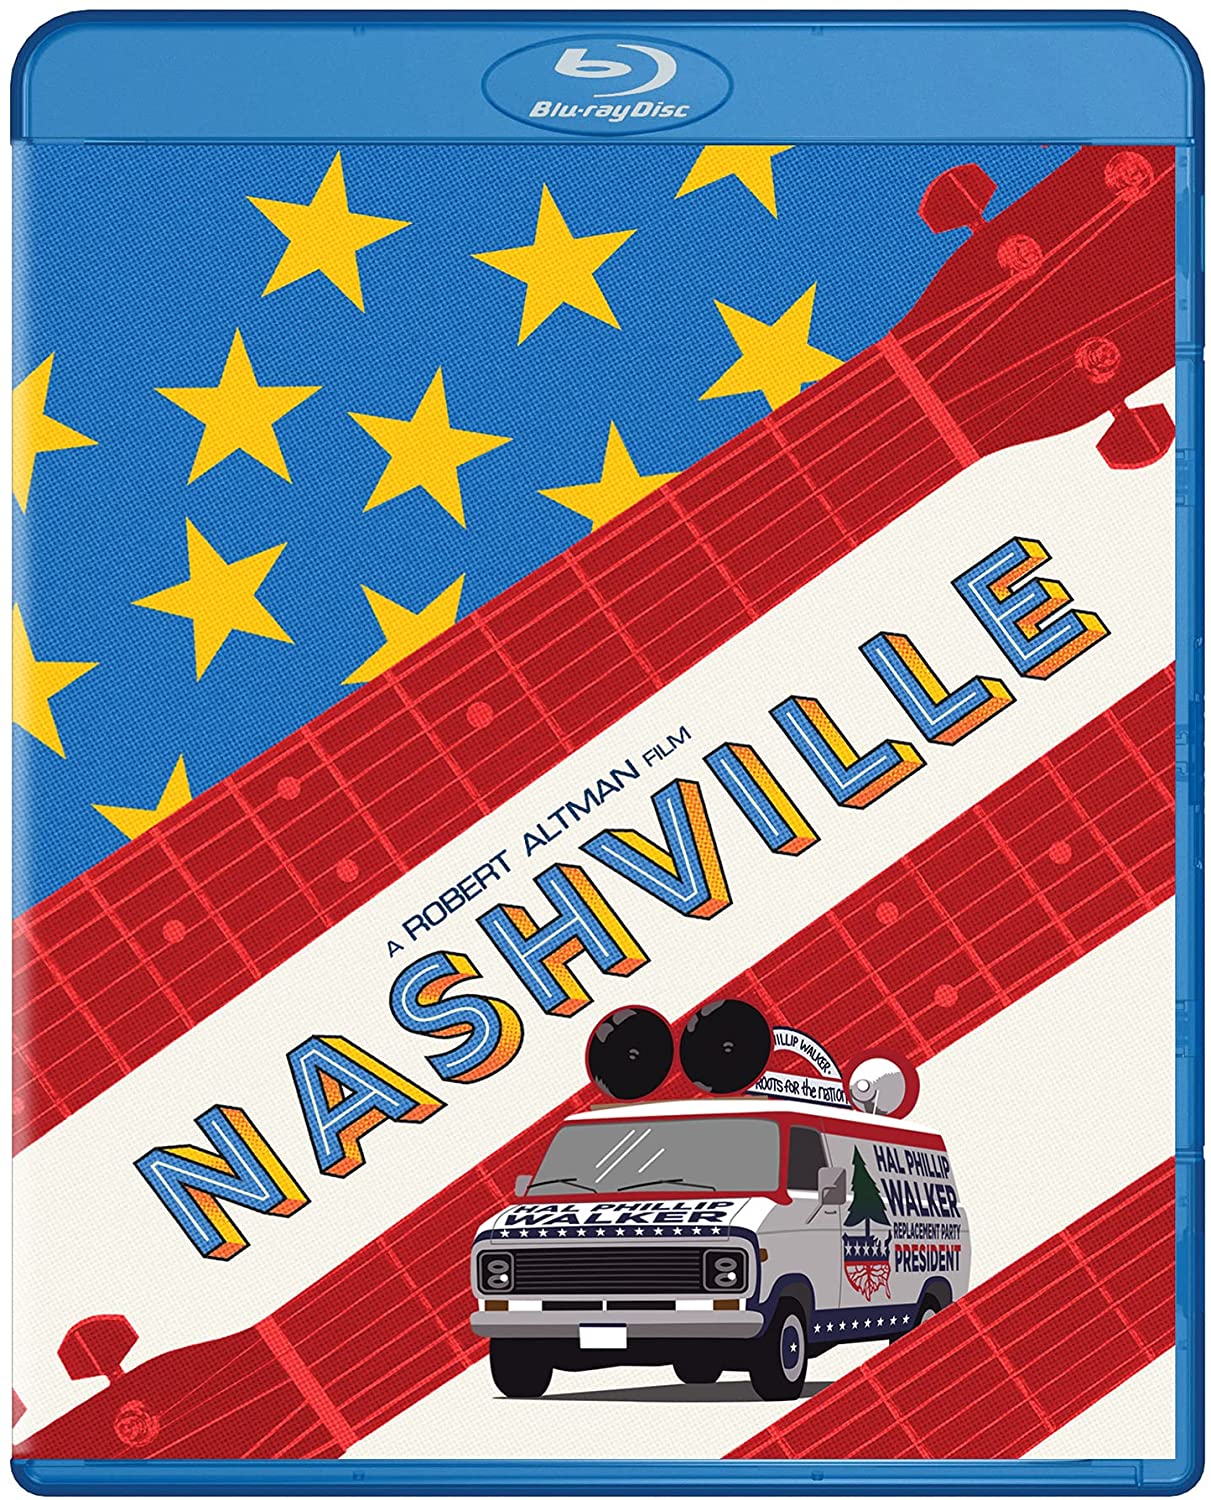 Nashville – Blu-ray Edition